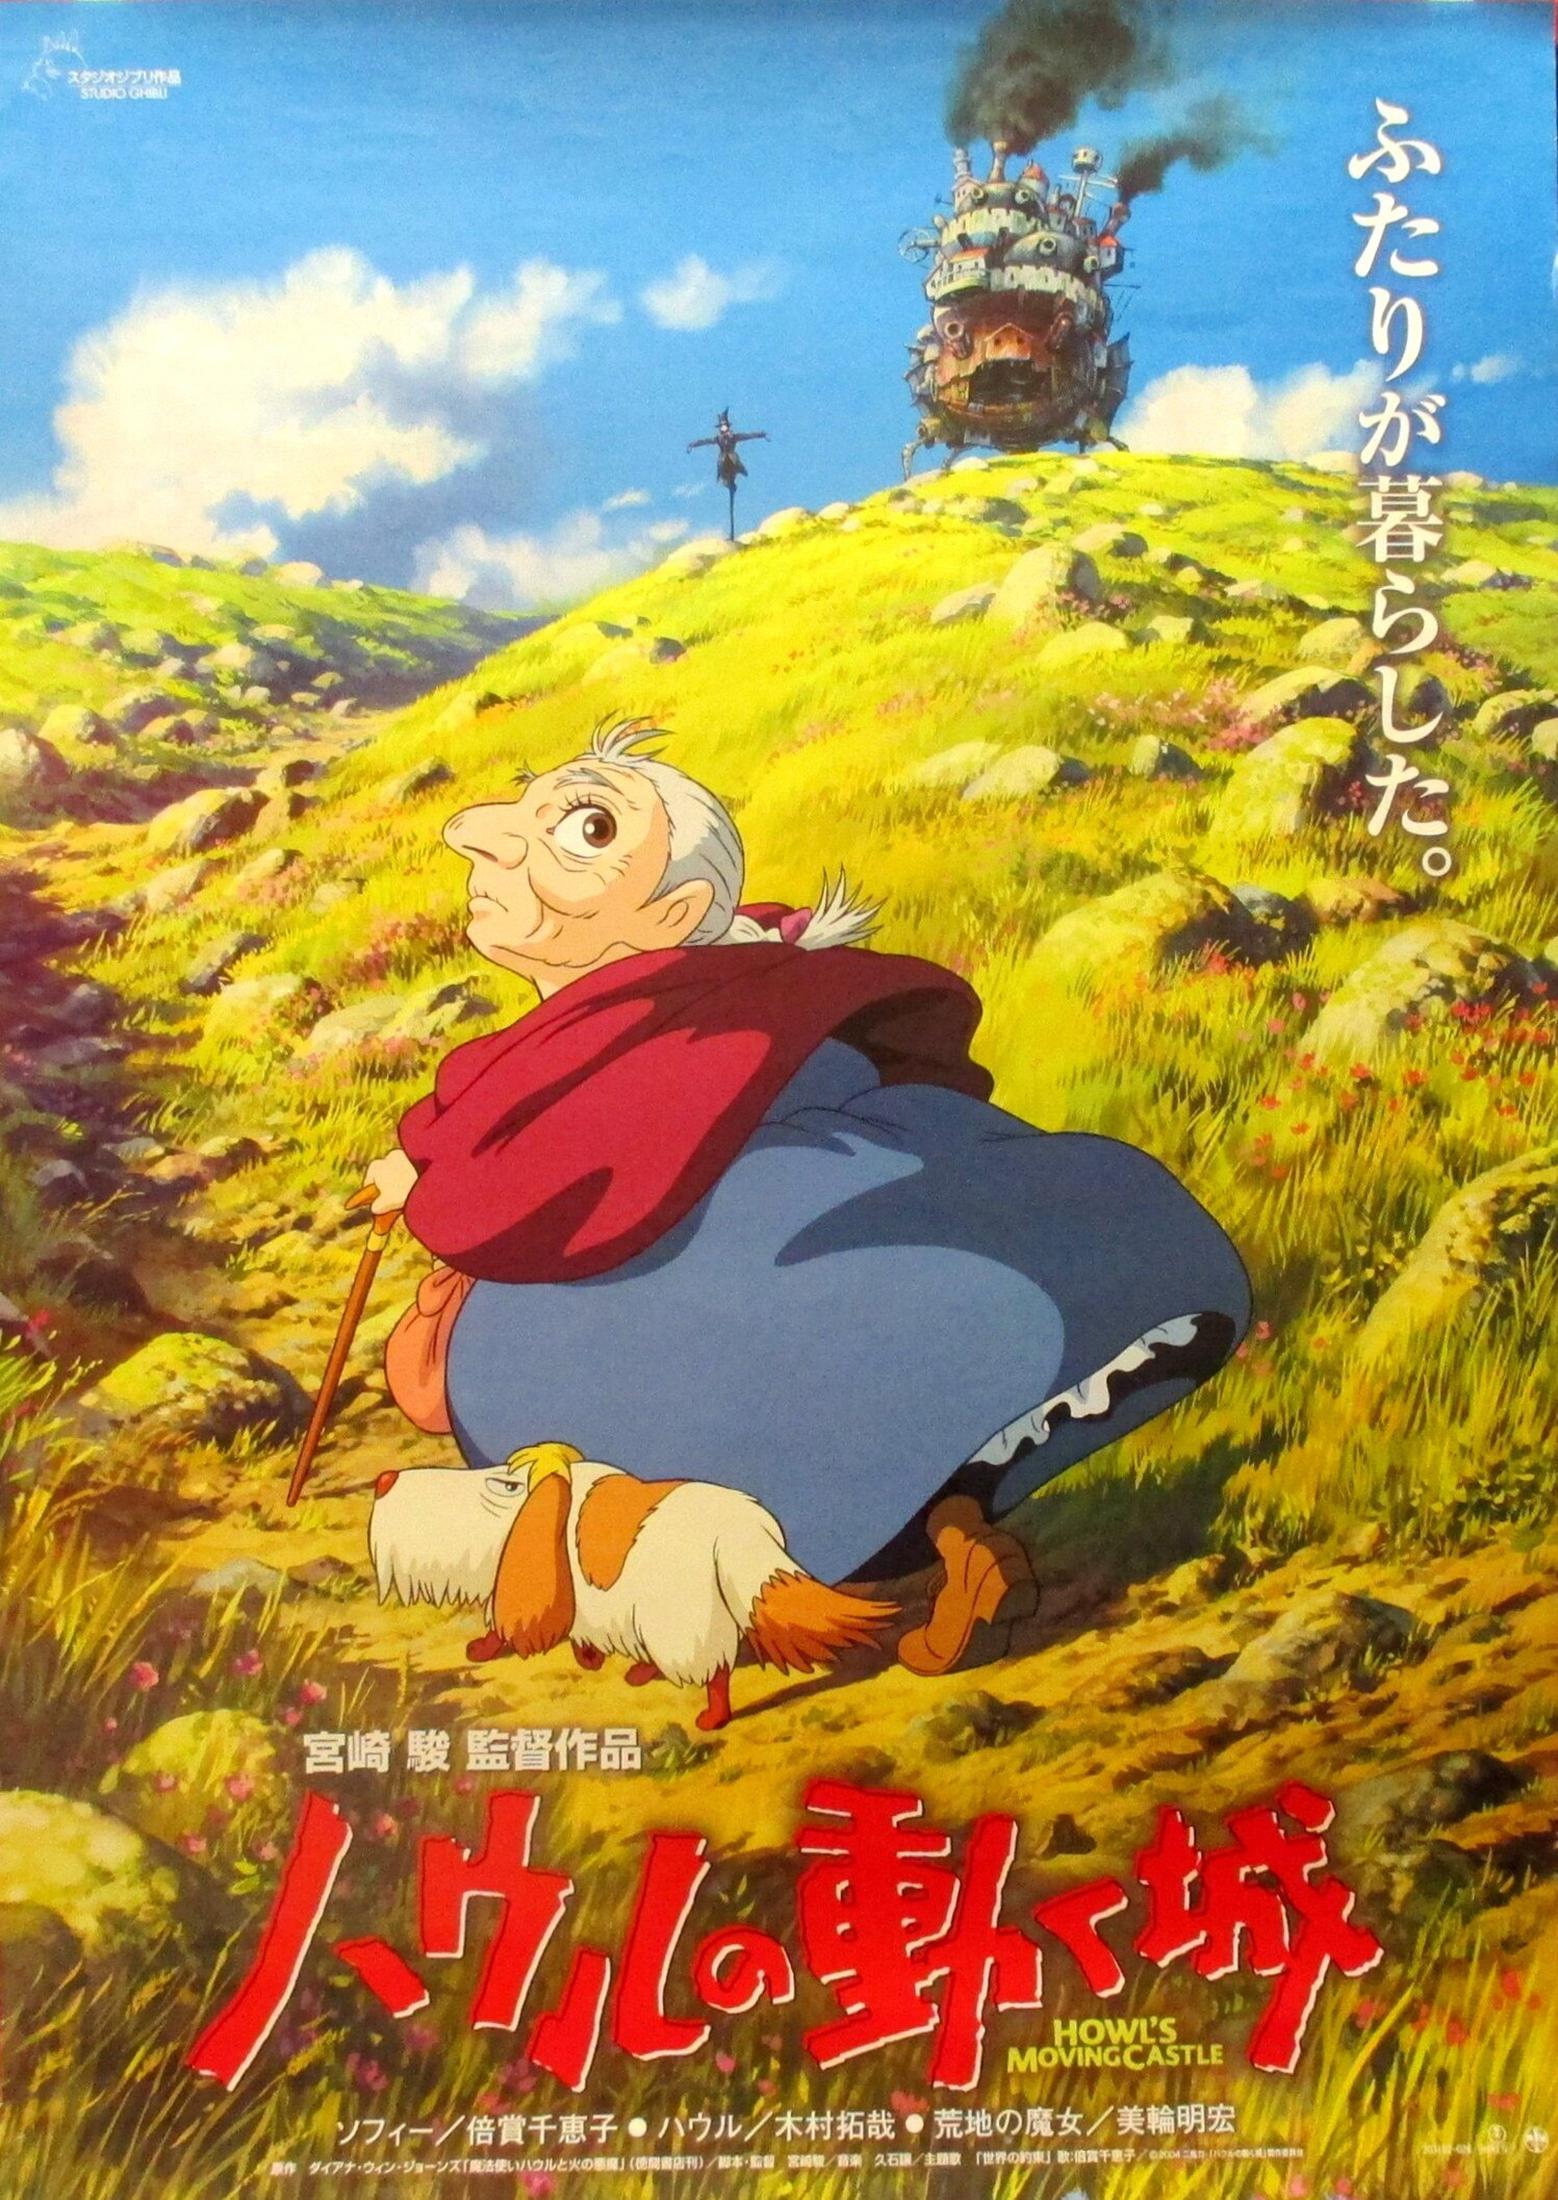 Howl's Moving Castle Original Vintage Poster, Hayao Miyazaki, Studio Ghibli - Print by Unknown